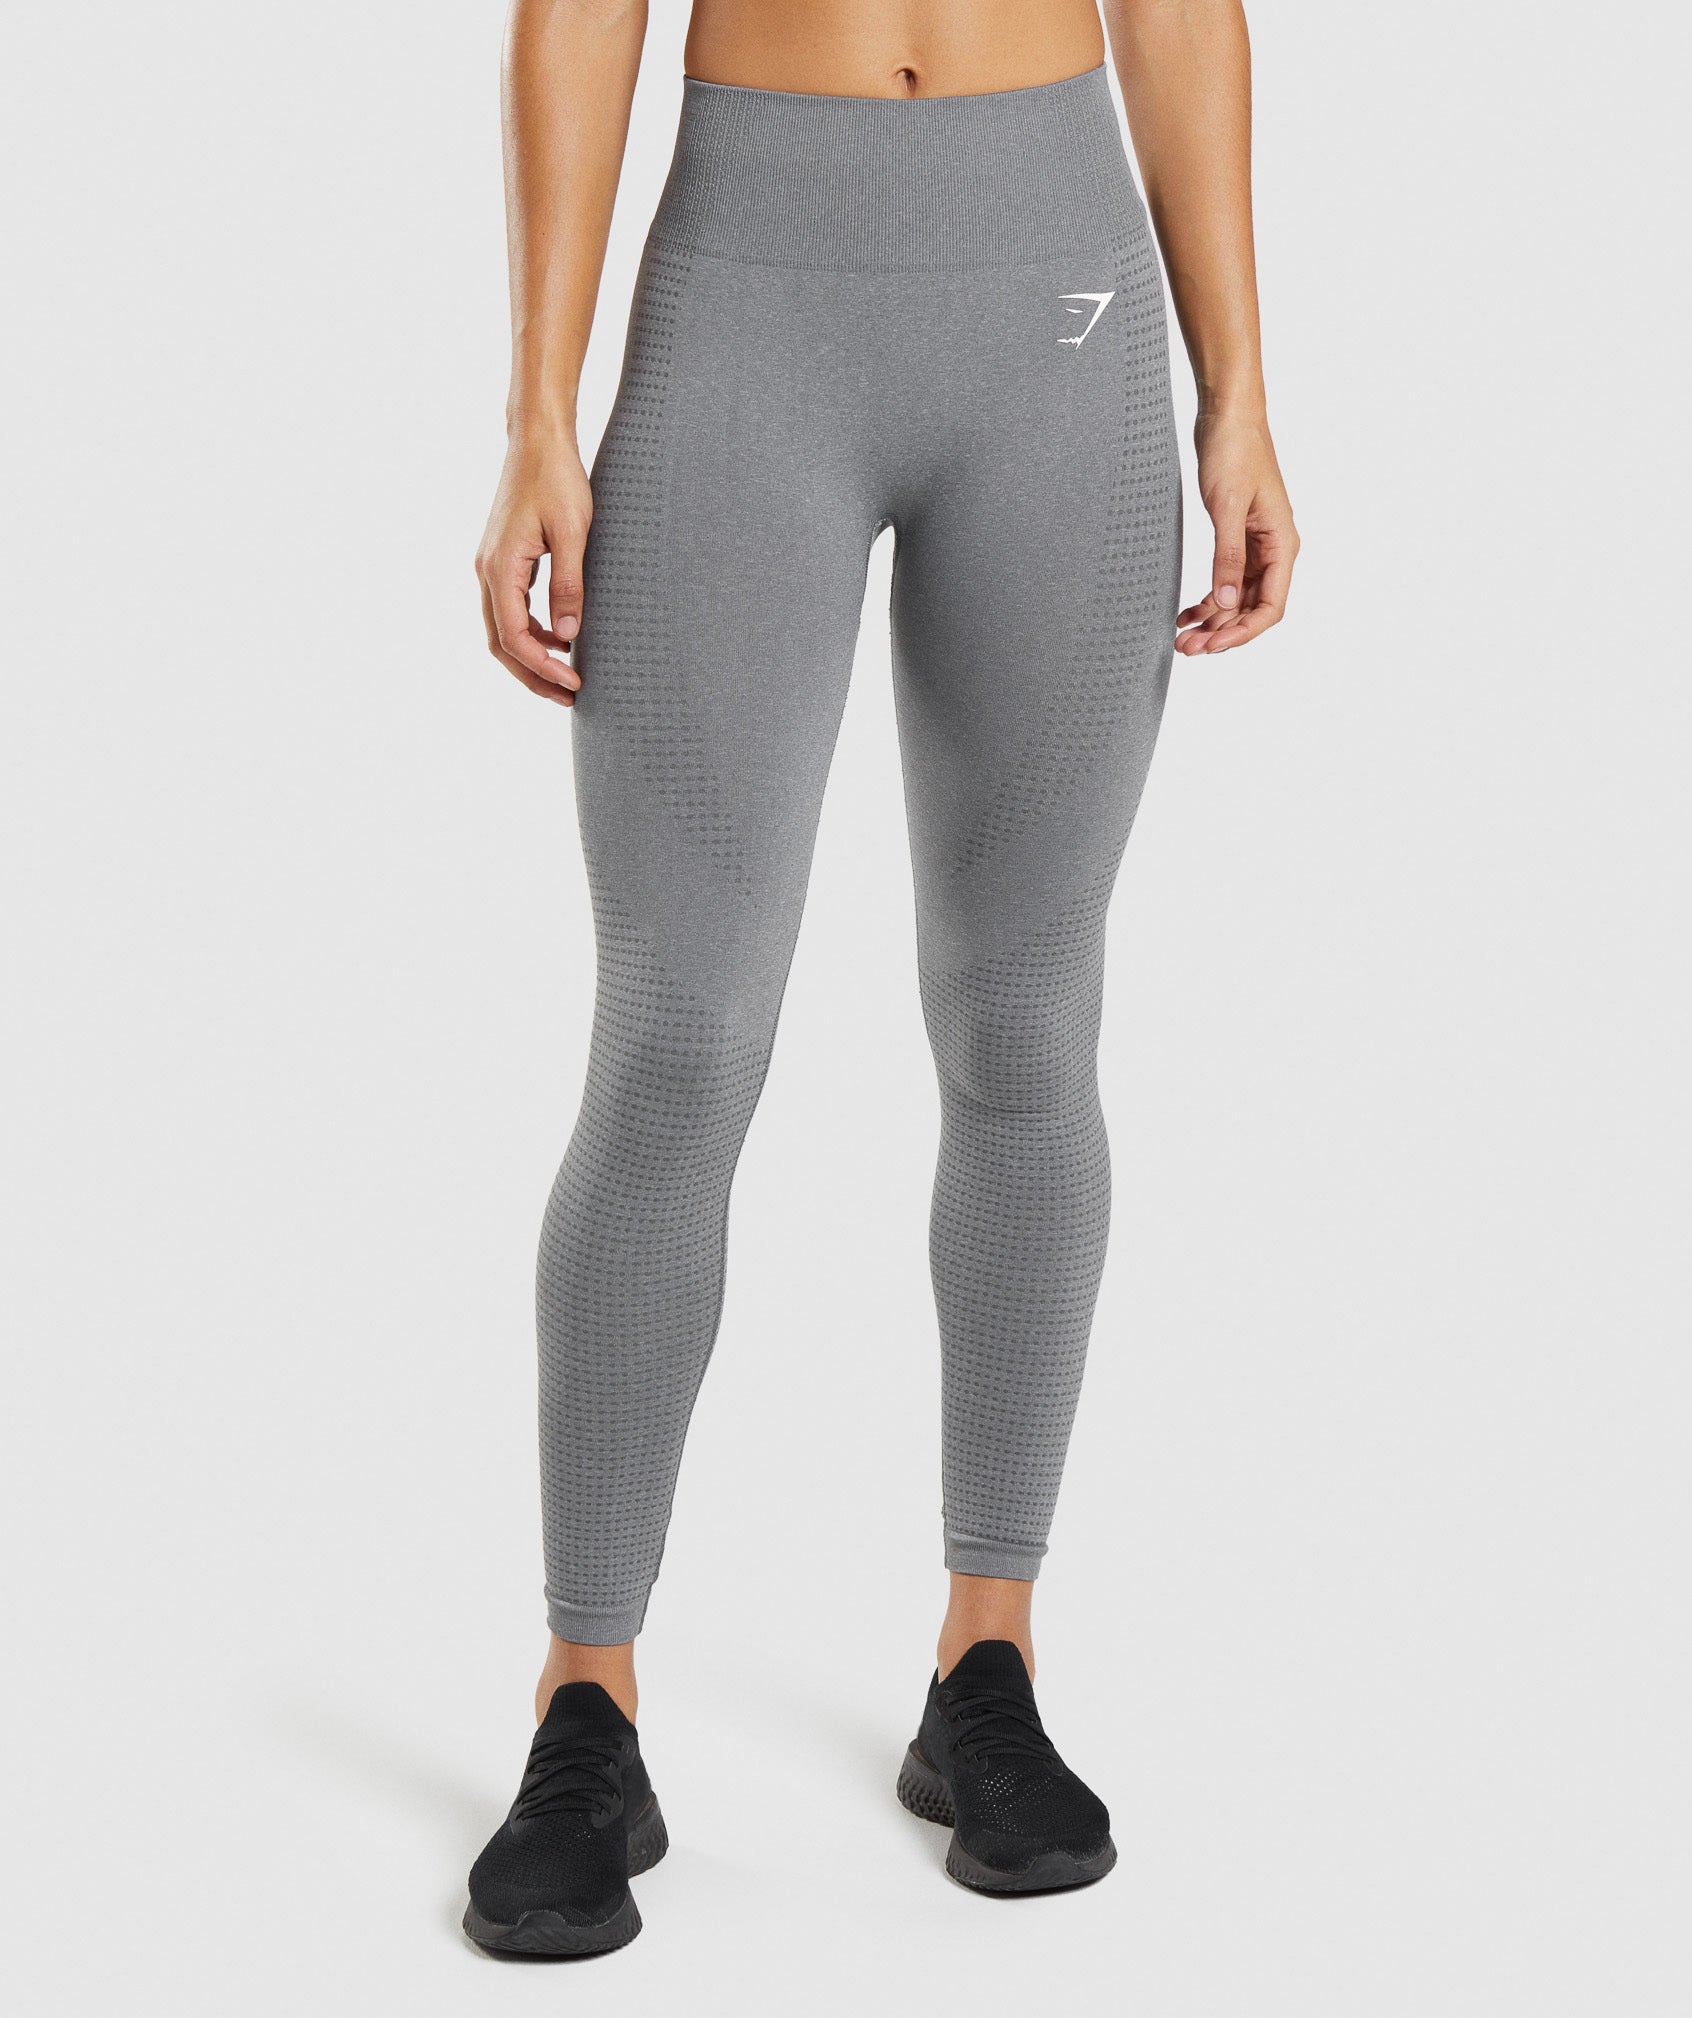 AYBL grey pulse ombré seamless leggings Gray - $20 - From Laura